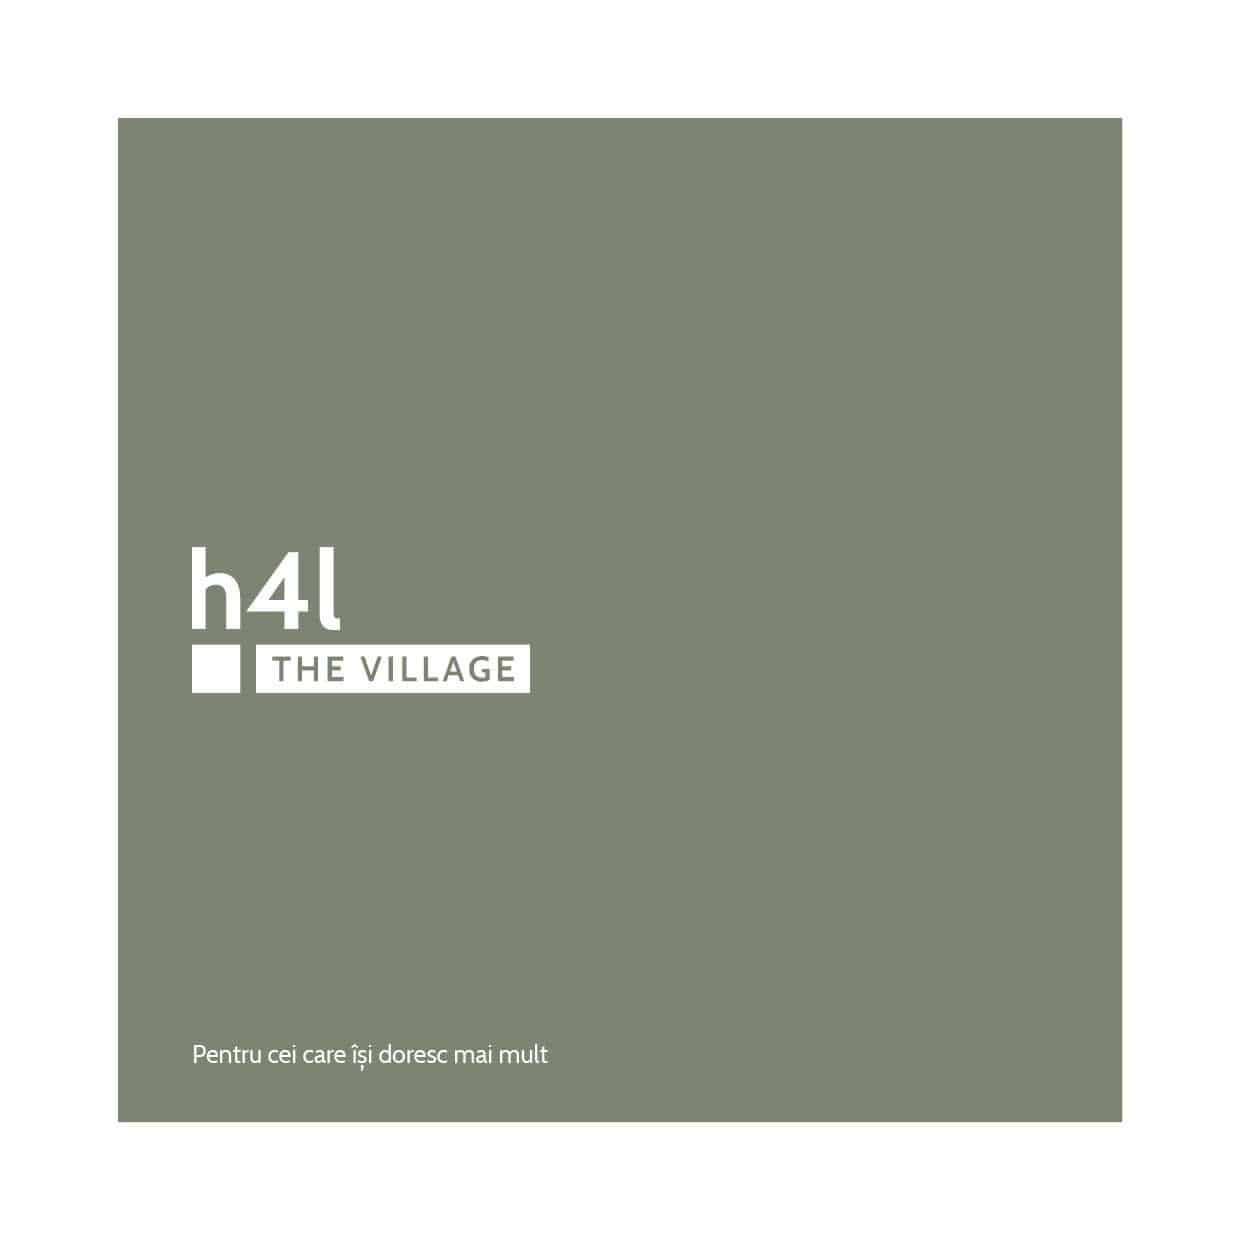 h4l, h4l THE VILLAGE, home 4 life, branding, design